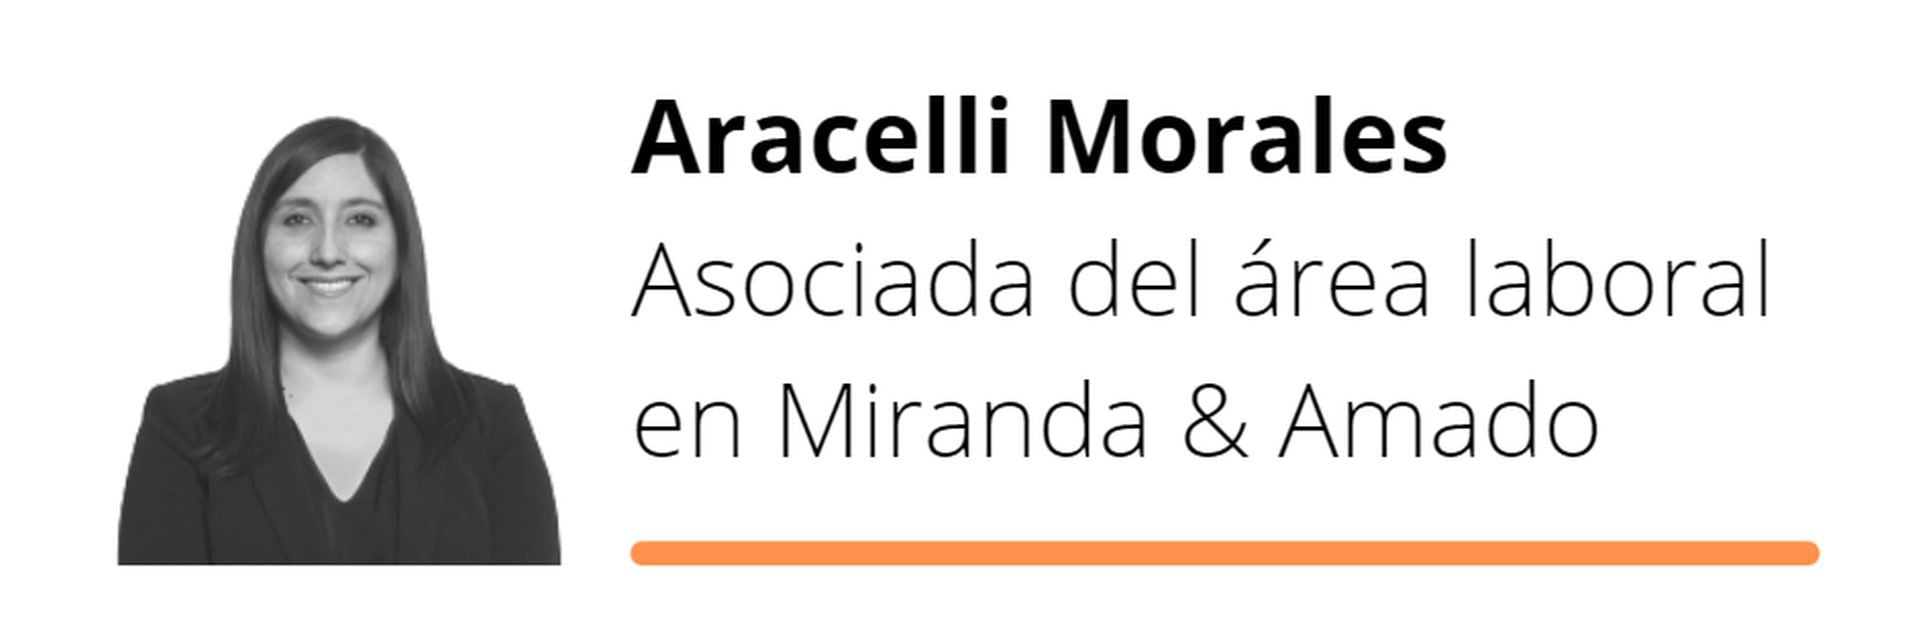 Aracelli Morales